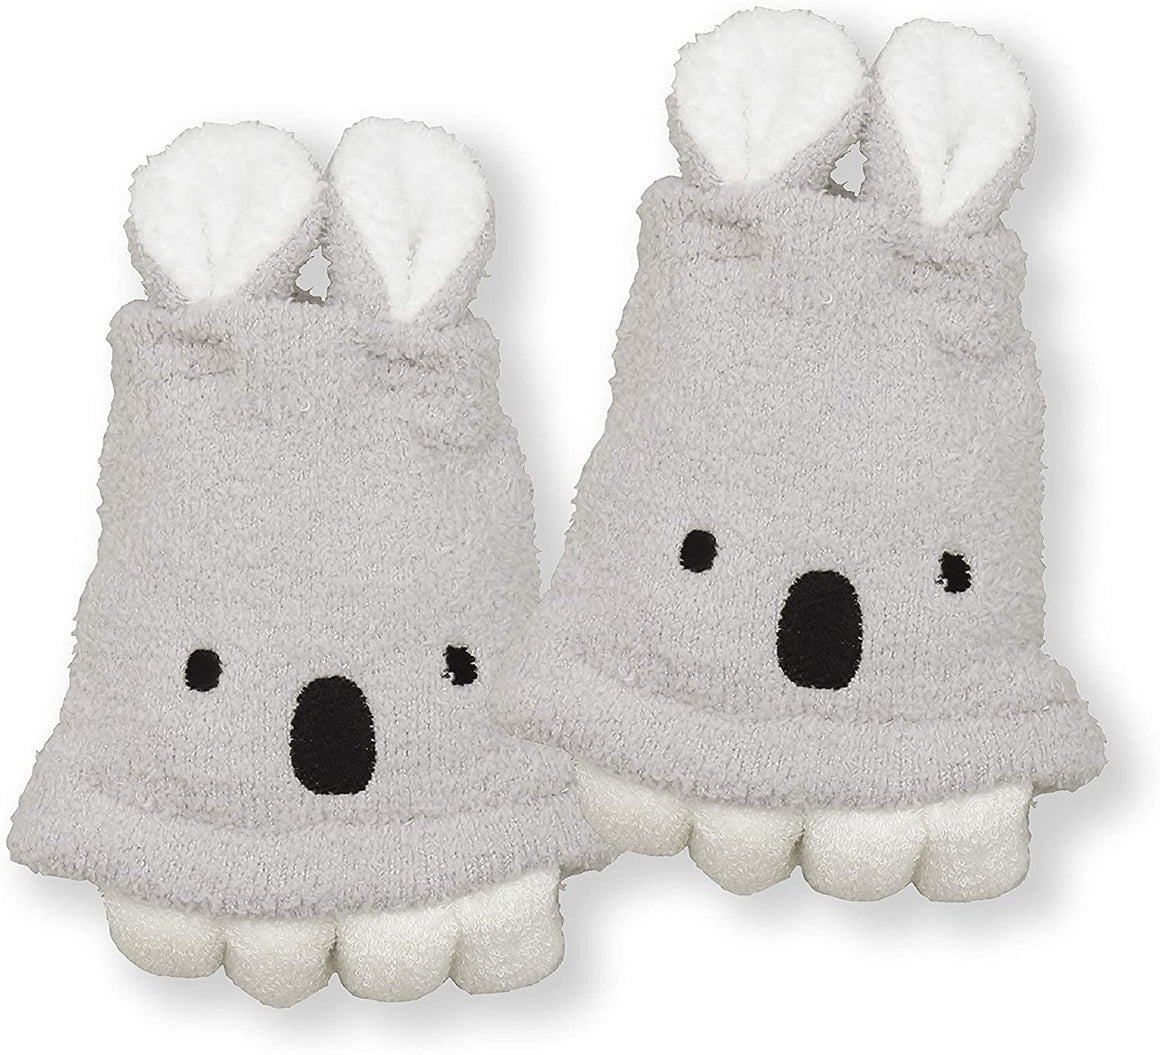 CB animal Relax Socks - Koala (1 pair) 健康五指襪- 無尾熊